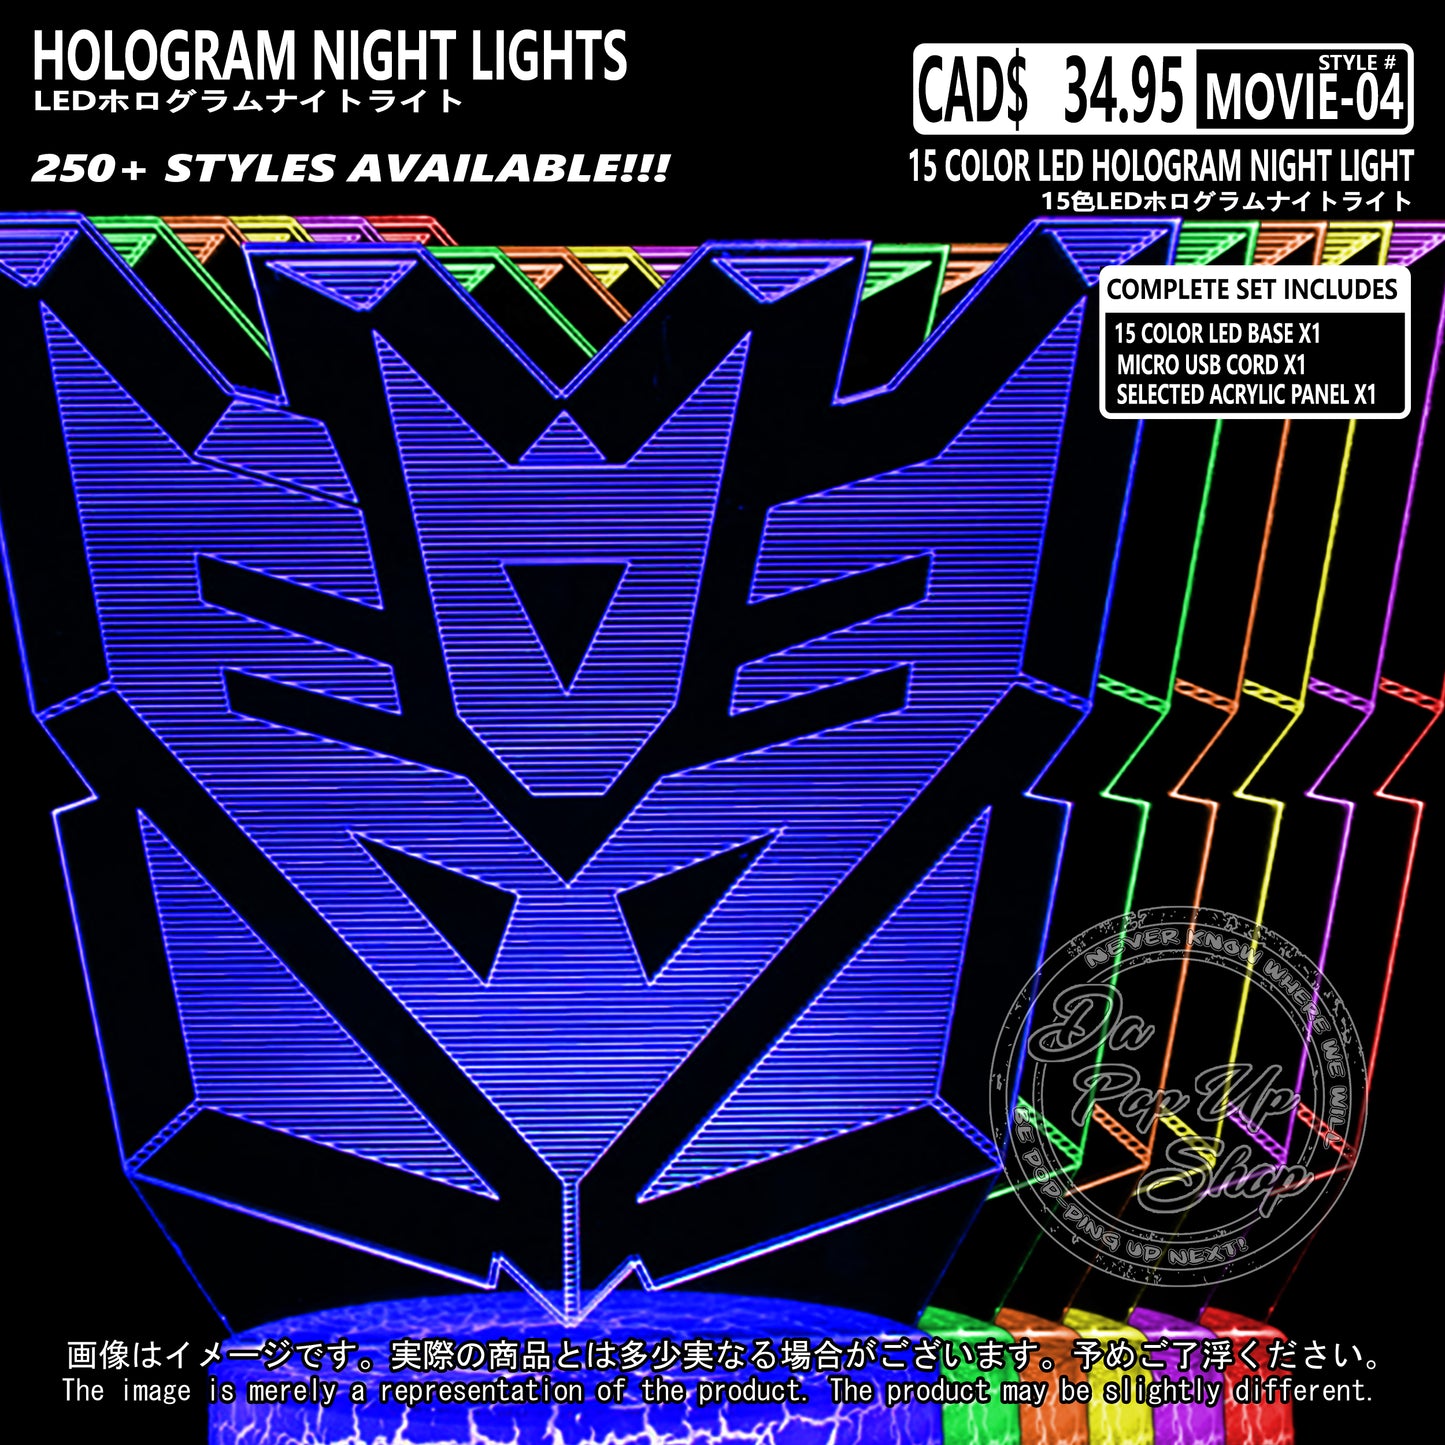 (MOVIE-04) DECEPTICONS Transformer Hologram LED Night Light